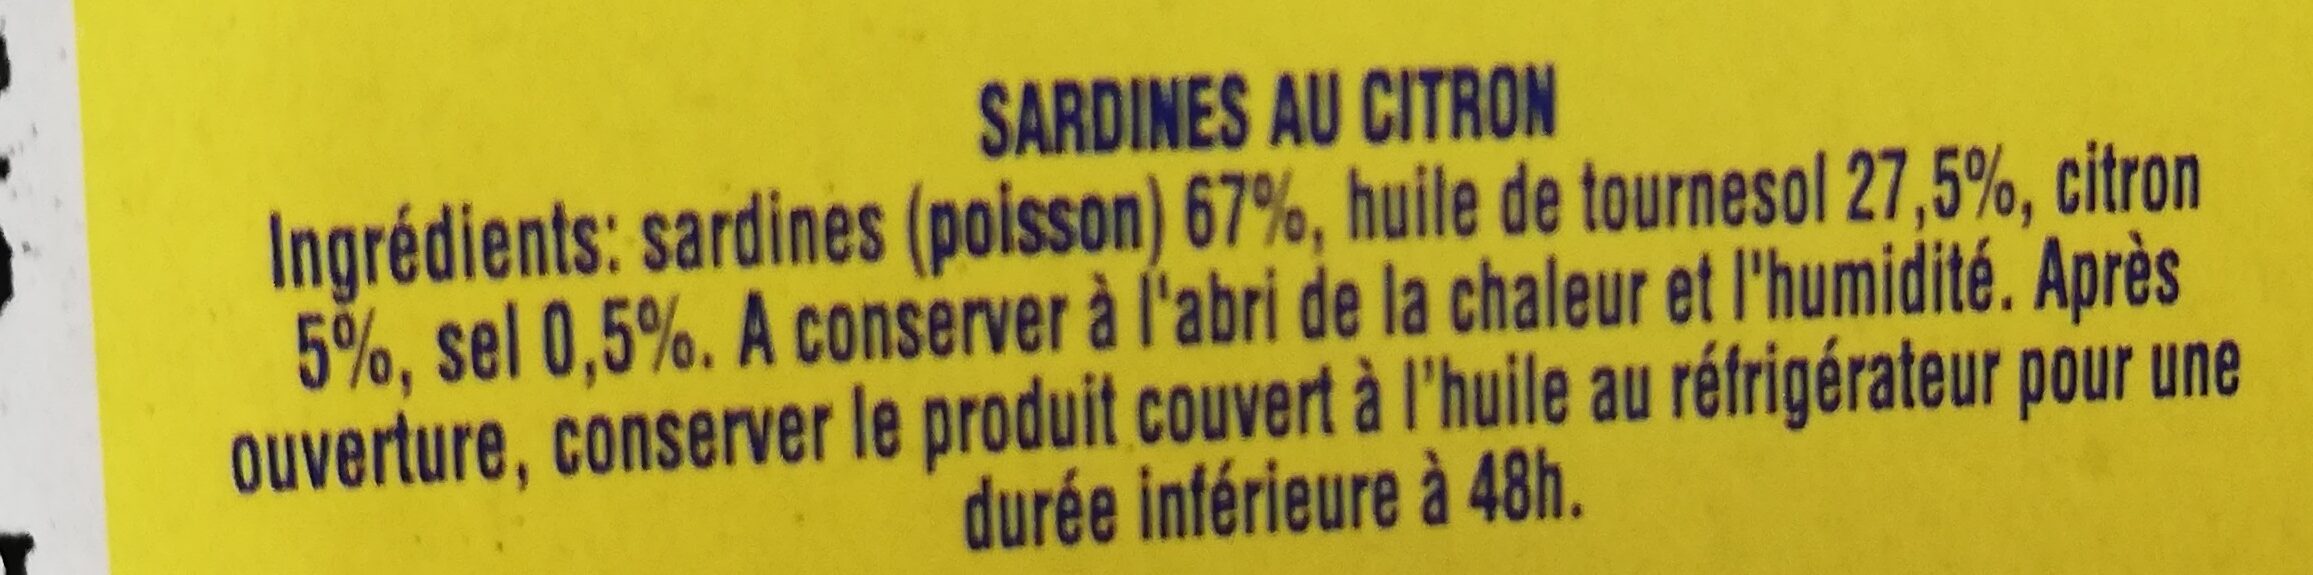 Sardines de mediterranée - Ingredients - fr